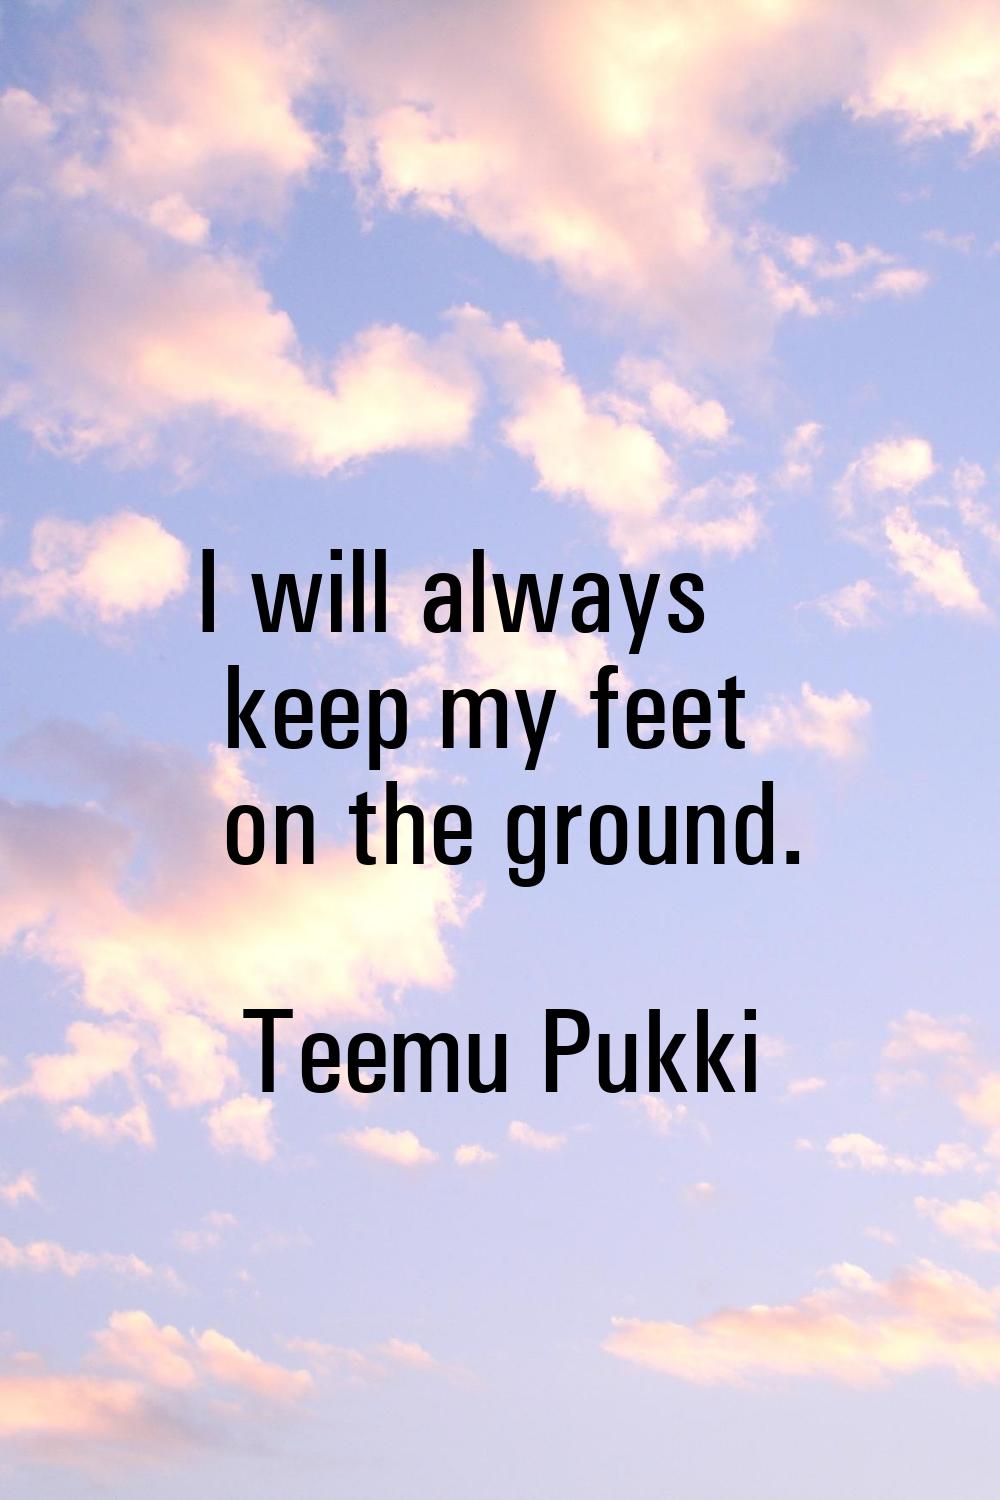 I will always keep my feet on the ground.